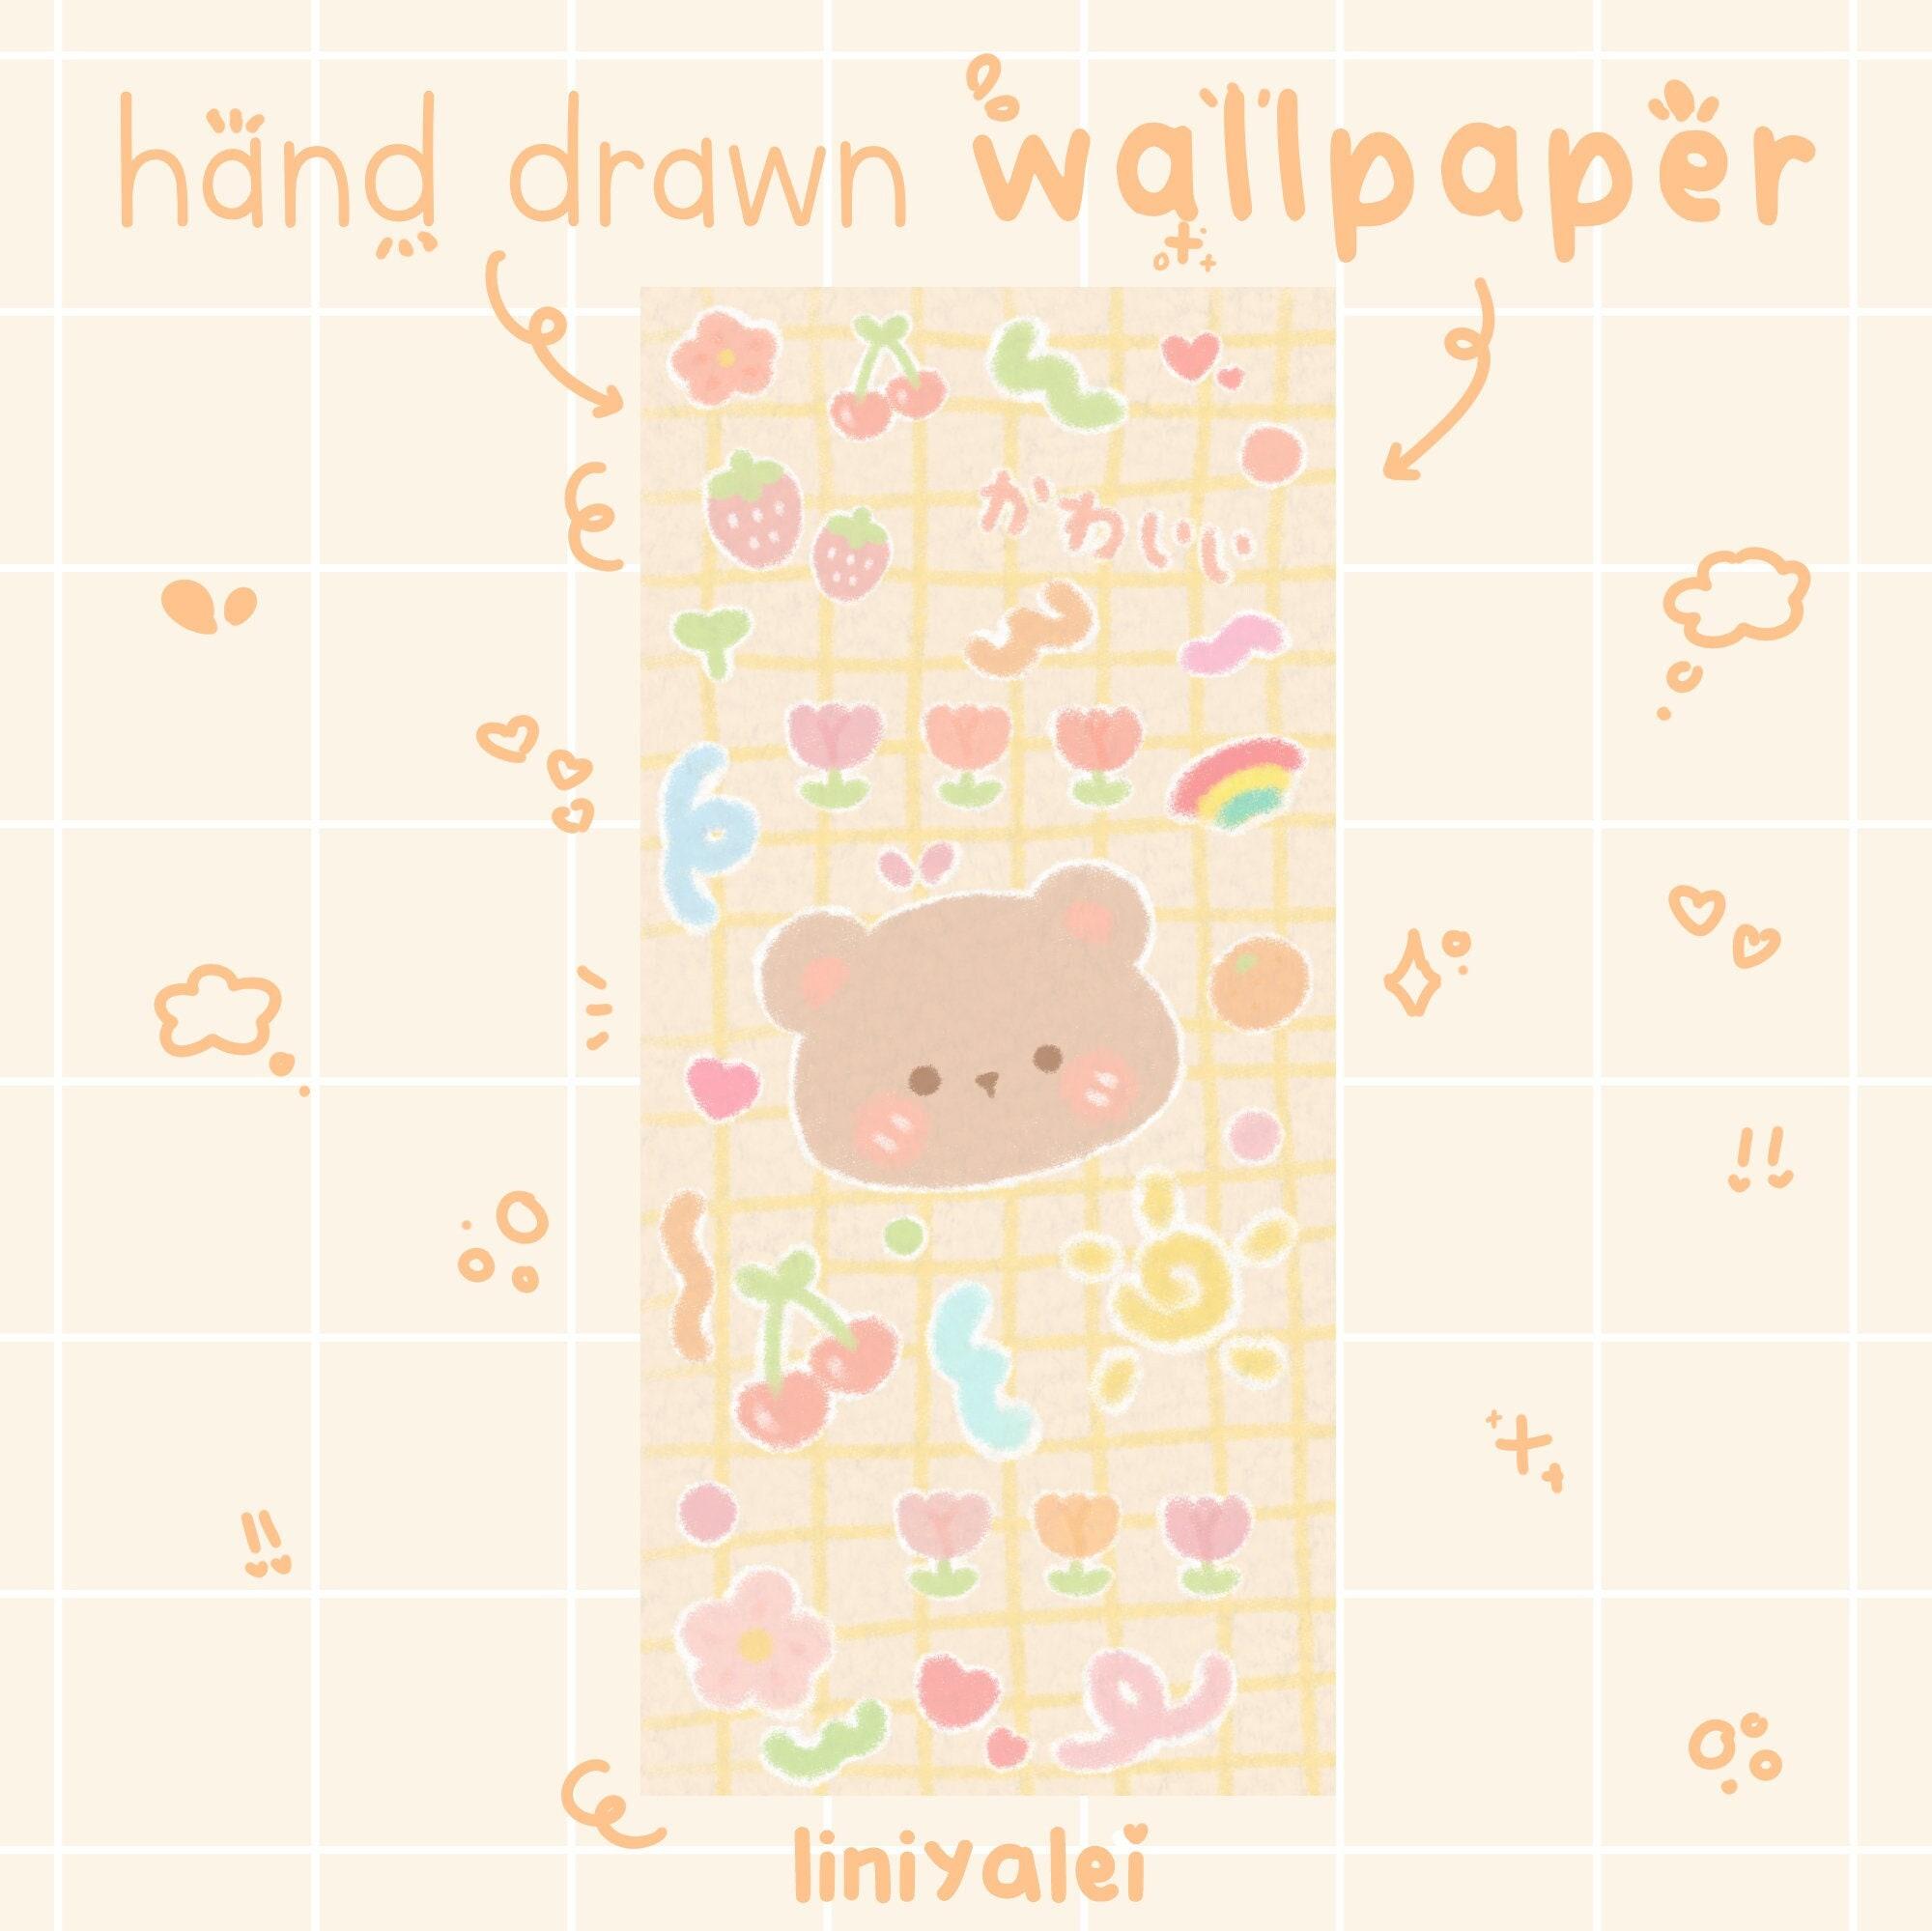 Kawaii Phone And iPhone Wallpaper Cute For